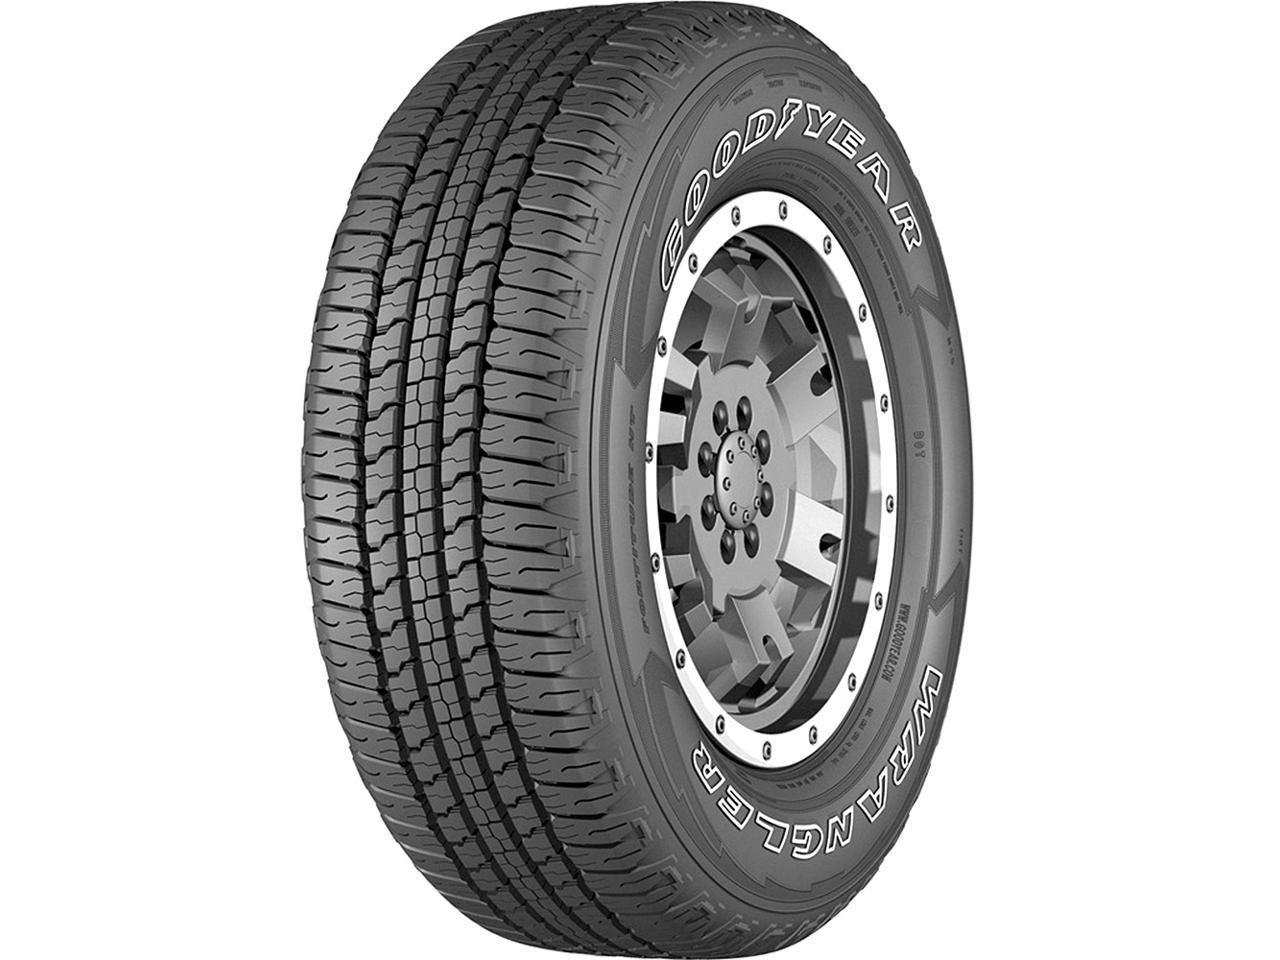 265/70R17 115T - Goodyear Wrangler Fortitude HT Highway All Season Tire -  